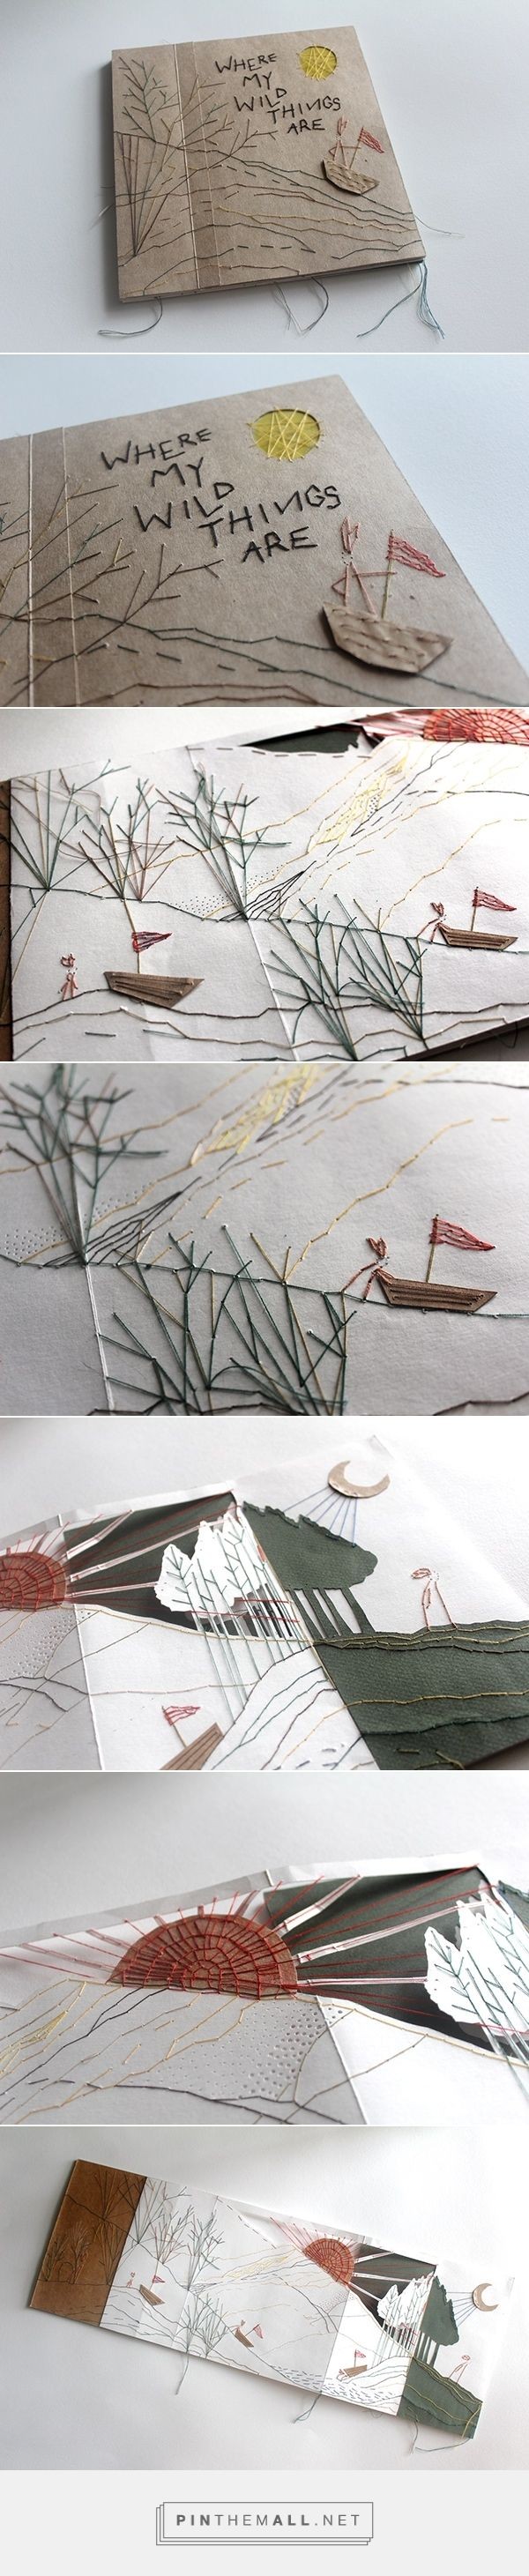 Serene Ng: stitched paper book illustration